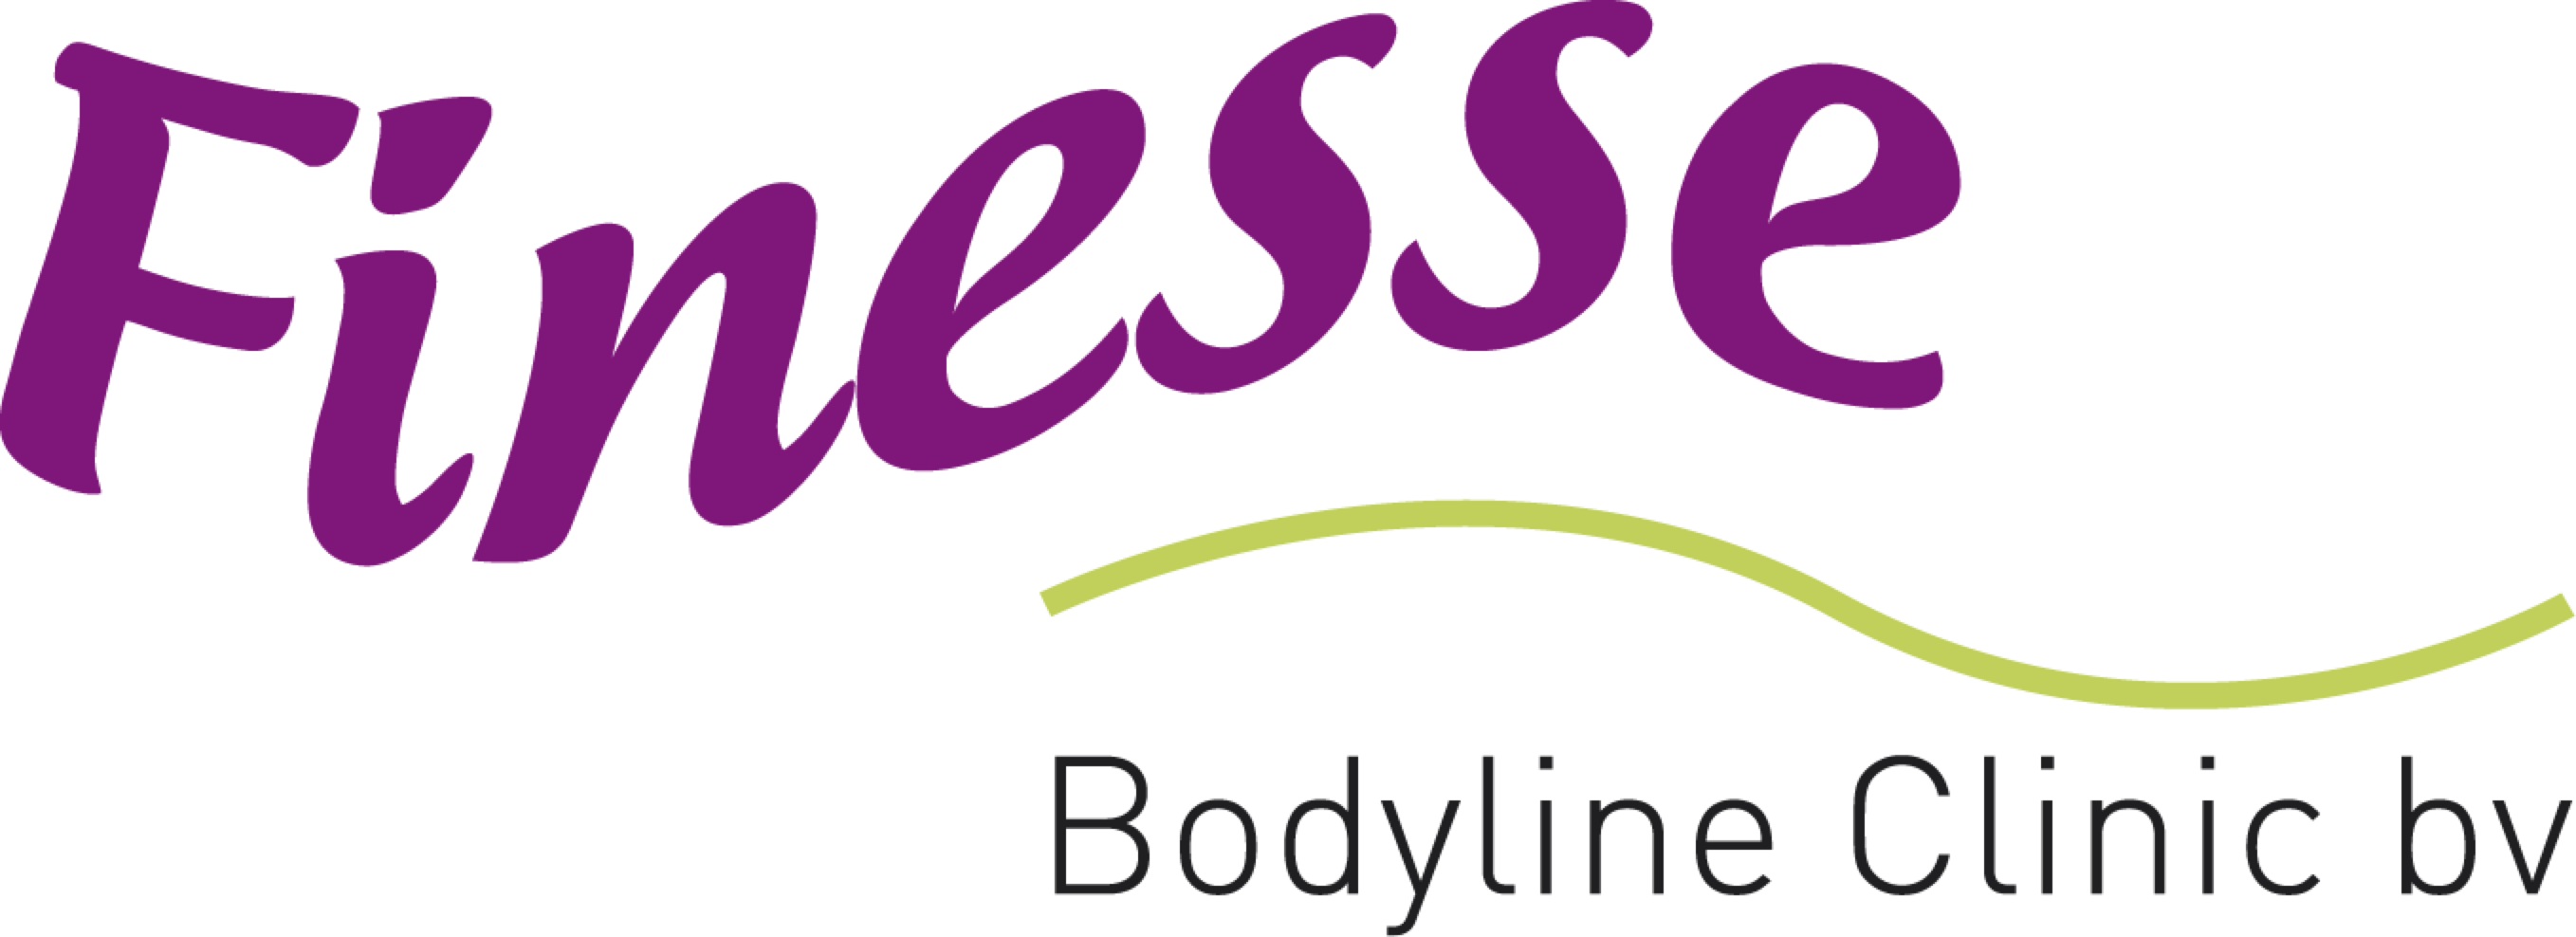 Finesse Bodyline Clinic Logo